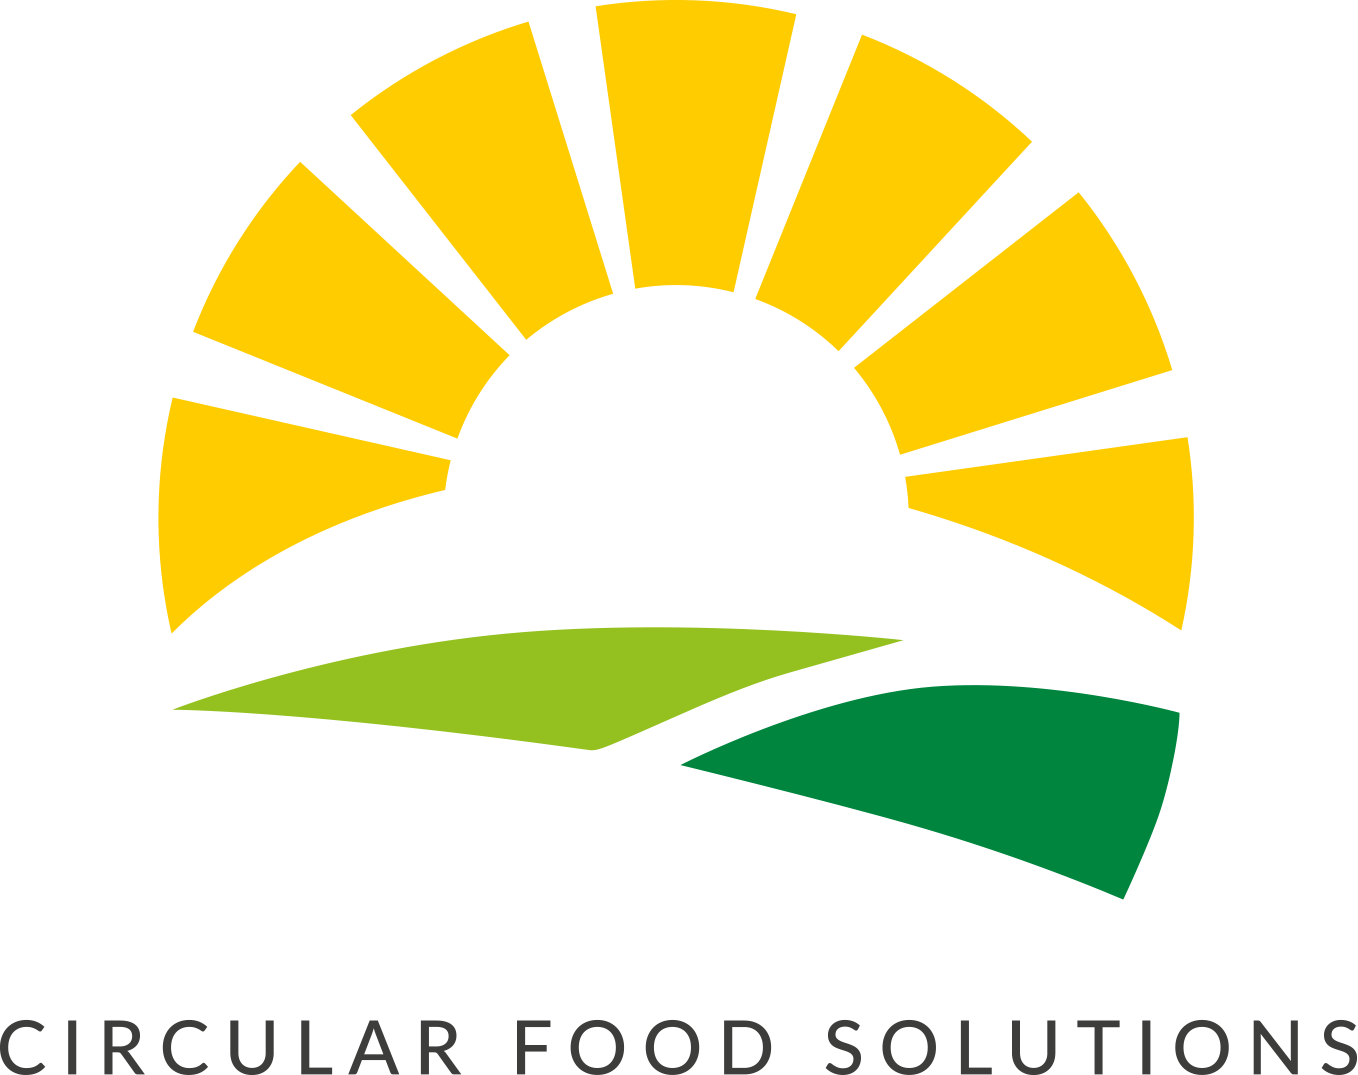 Circular Food Solutions